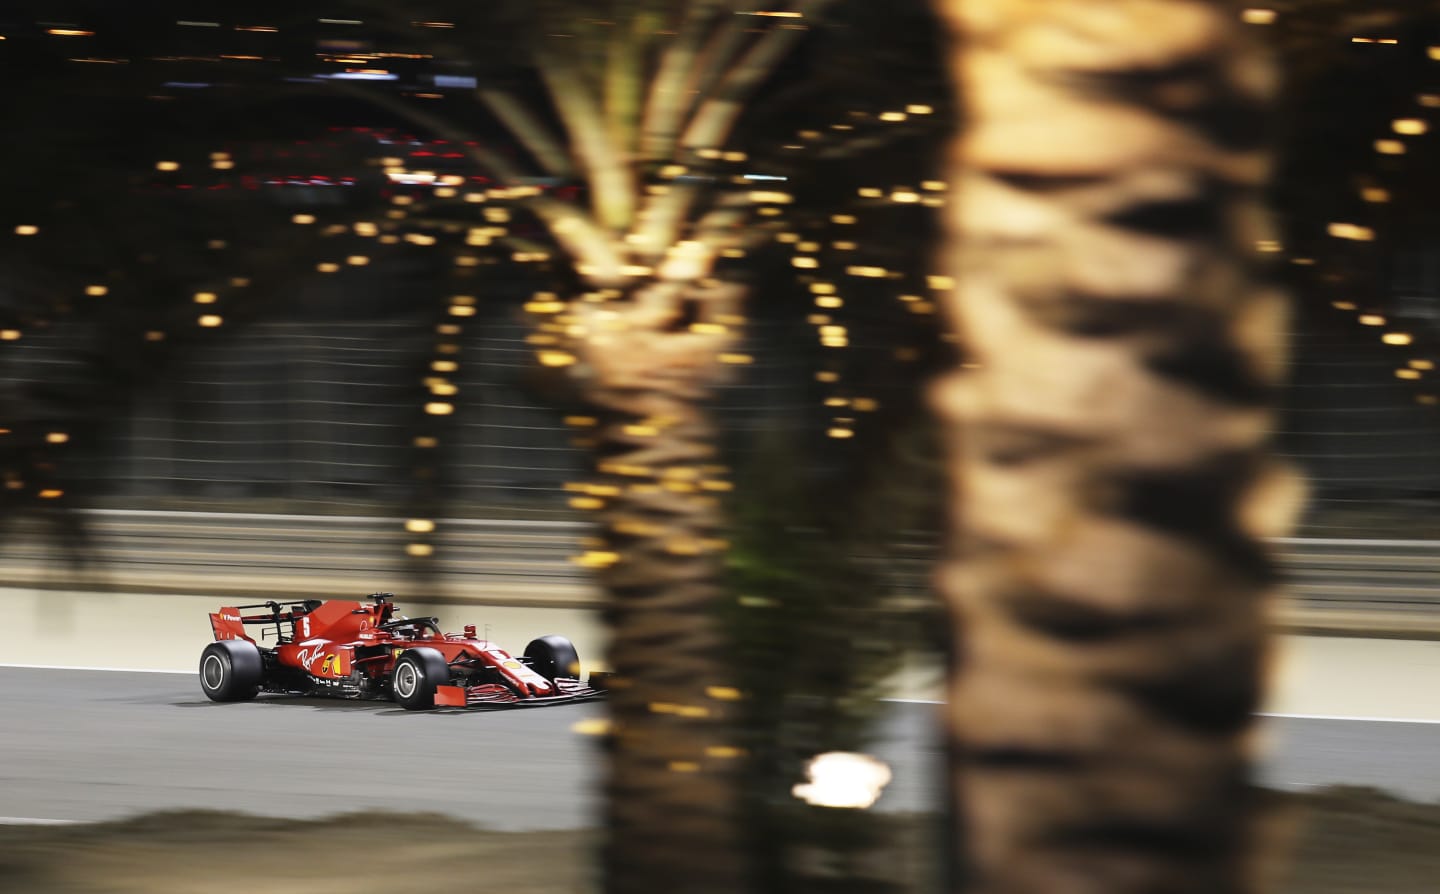 BAHRAIN, BAHRAIN - NOVEMBER 27: Sebastian Vettel of Germany driving the (5) Scuderia Ferrari SF1000 on track during practice ahead of the F1 Grand Prix of Bahrain at Bahrain International Circuit on November 27, 2020 in Bahrain, Bahrain. (Photo by Kamran Jebreili - Pool/Getty Images)